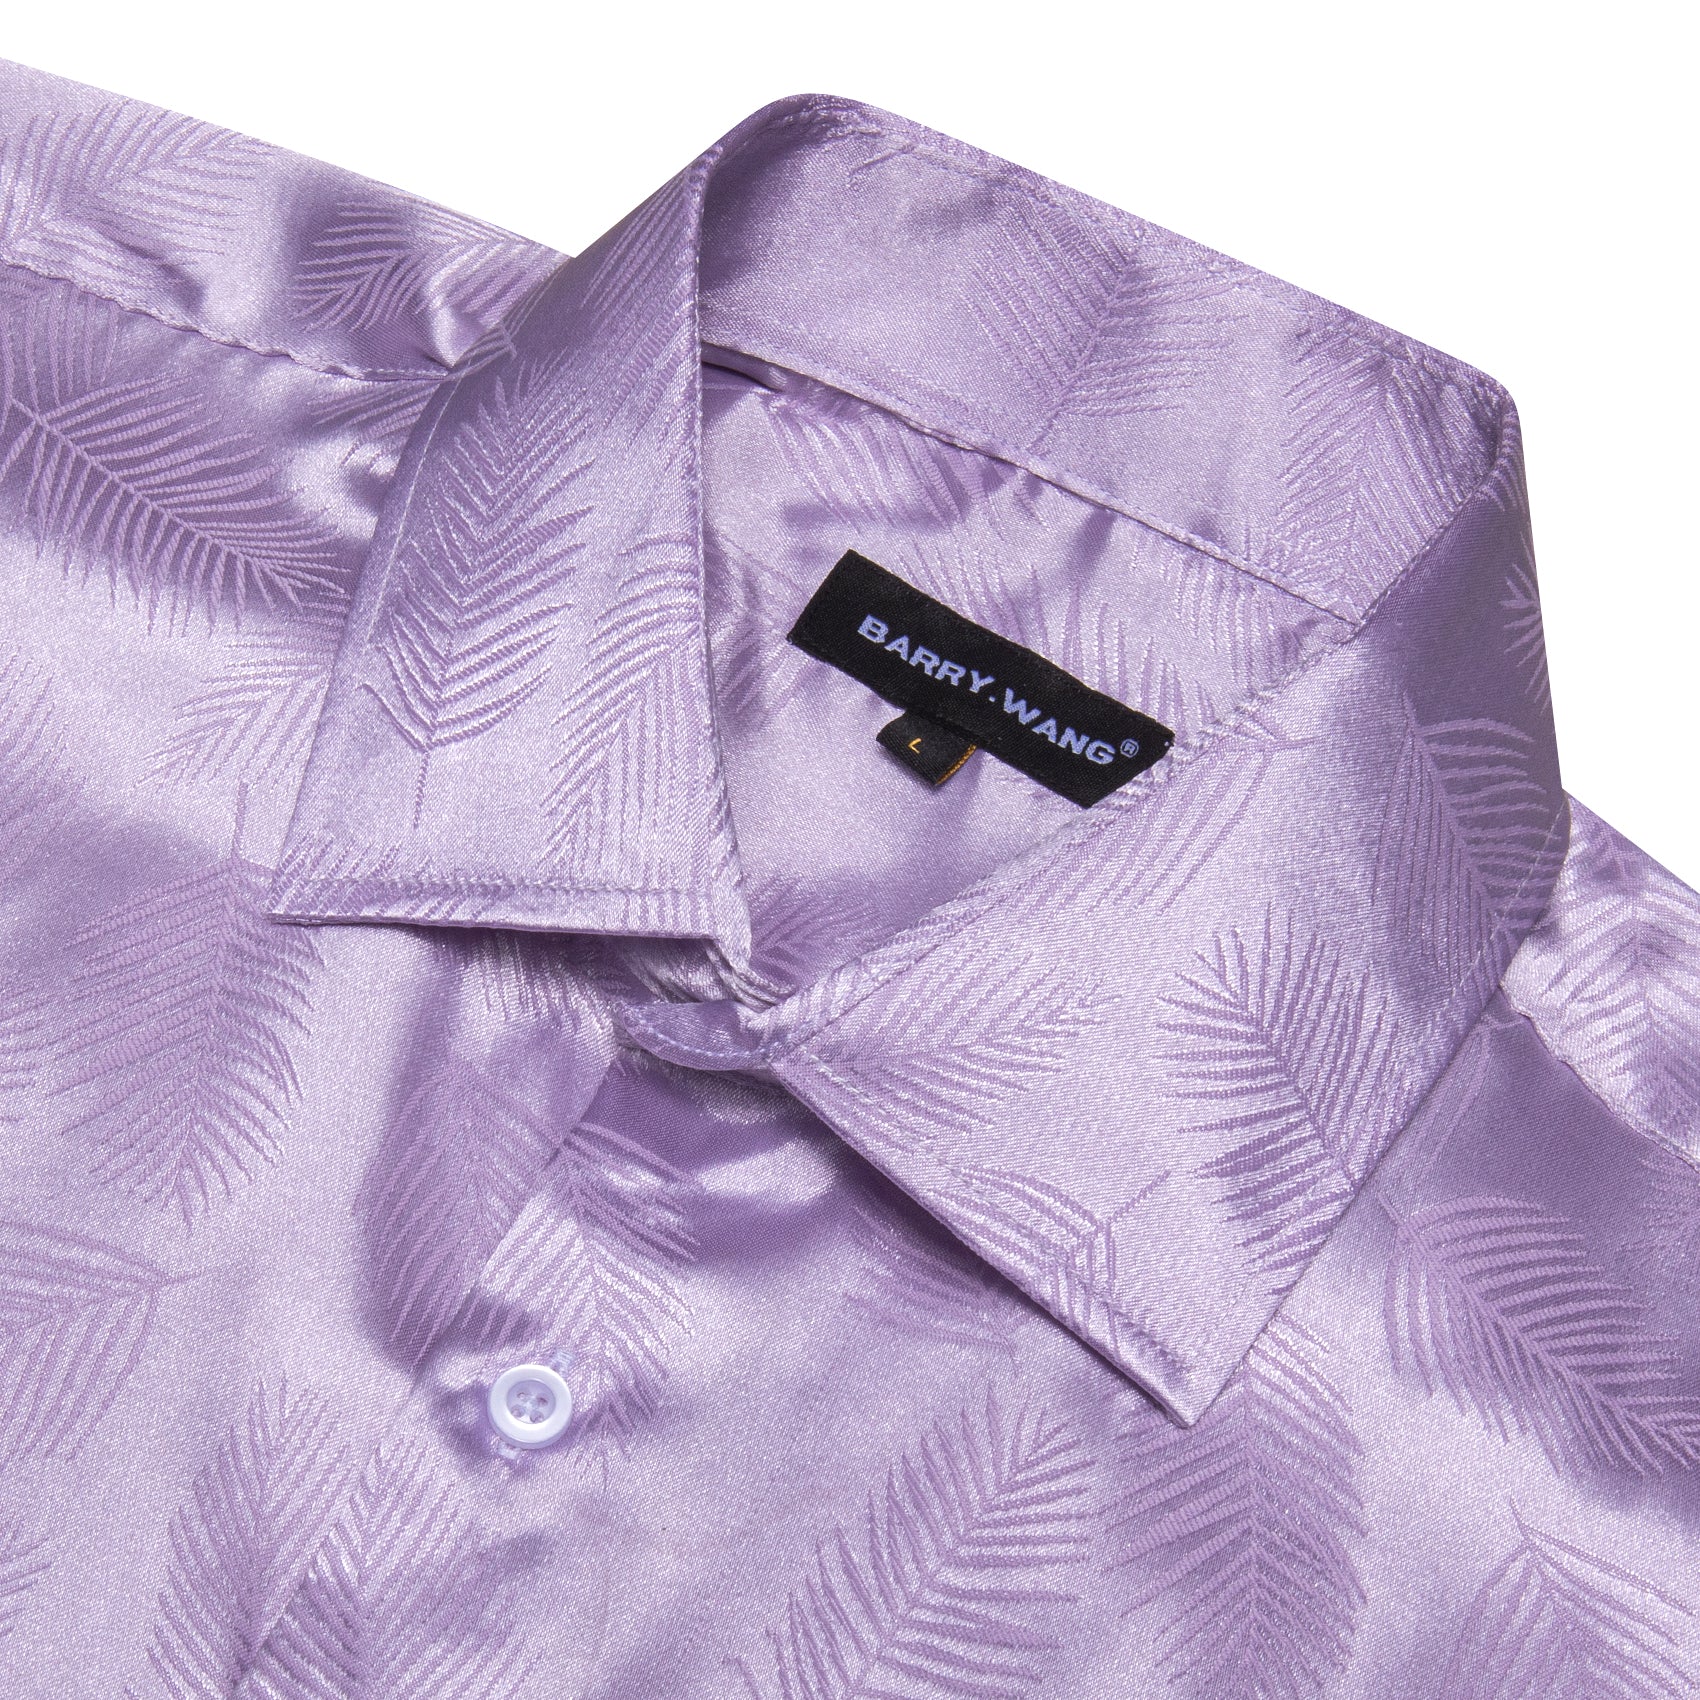 Floral purple dress shirt mens